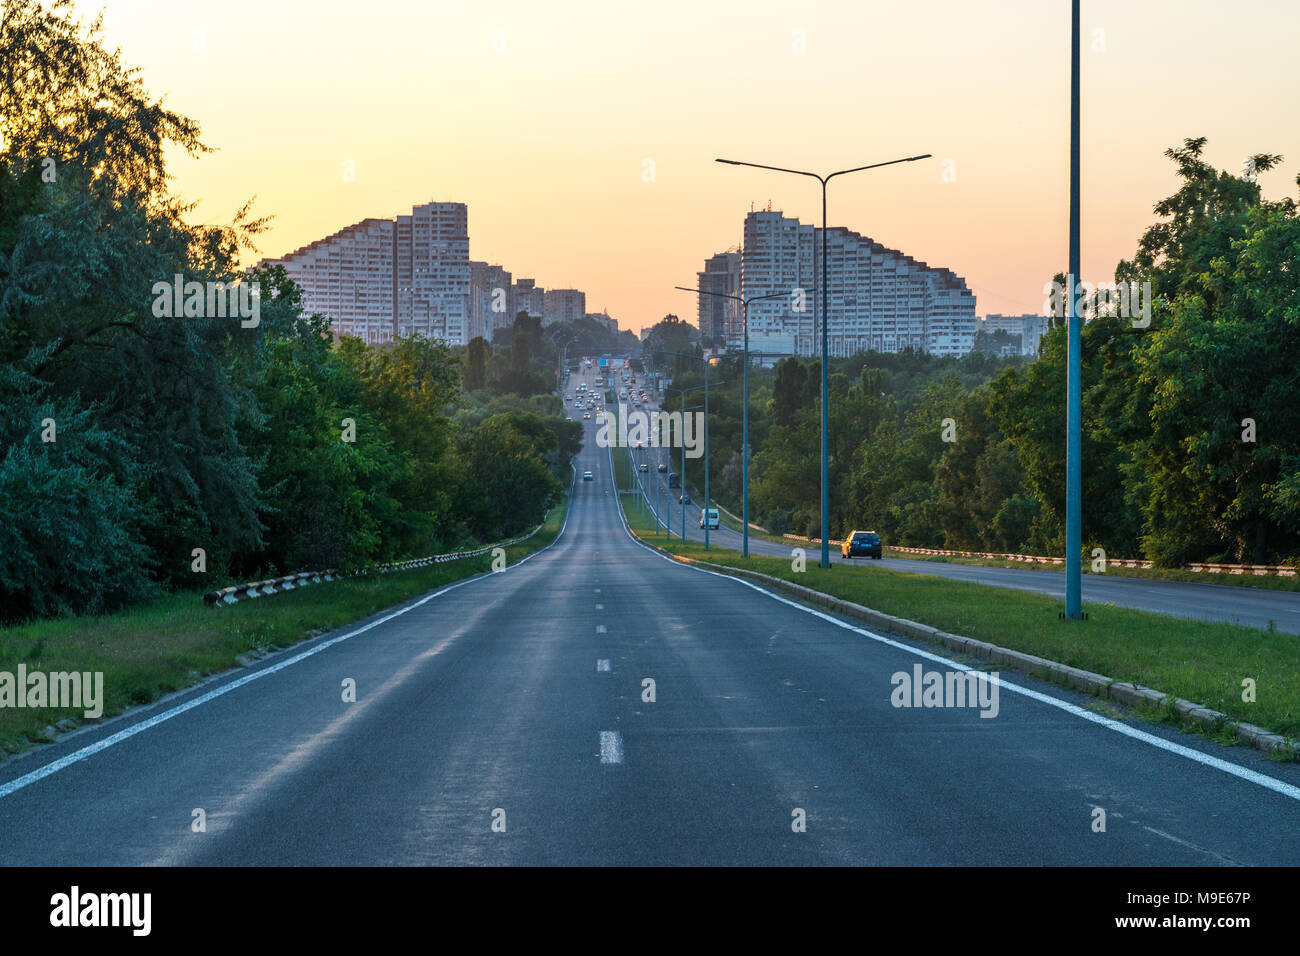 CHISINAU, MOLDOVA - 14 JULY, 2016: The entrance of the municipality of Chisinau, called the Gates of the city. Stock Photo